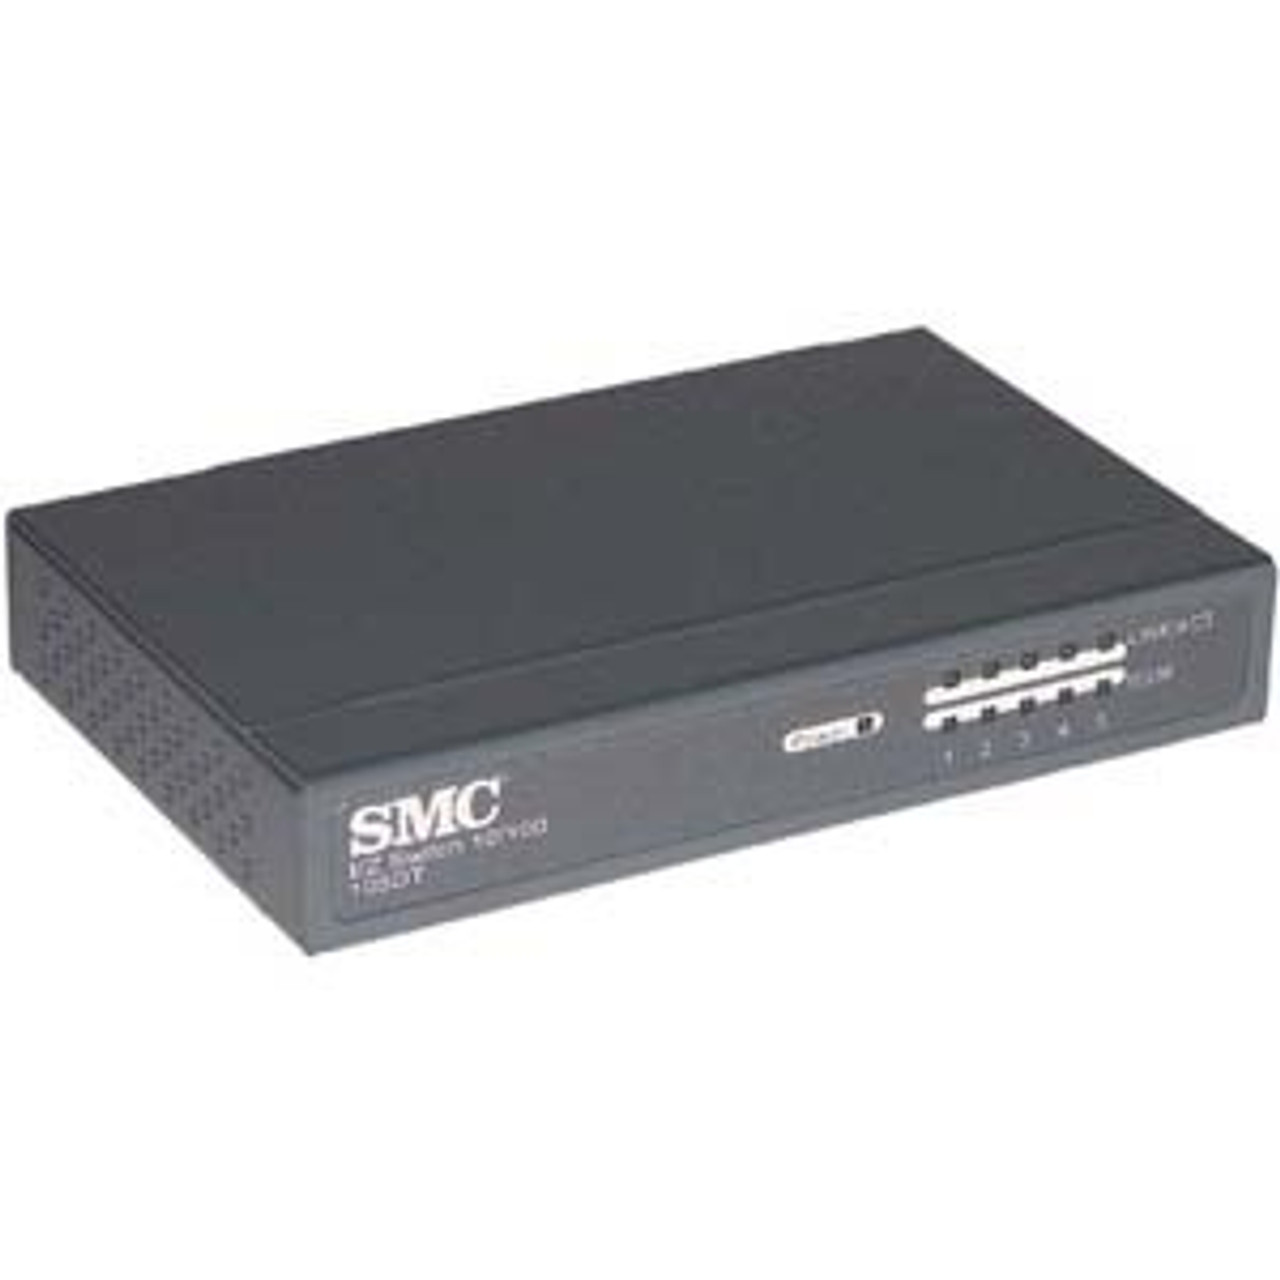 SMC105DT(ANIXTER) LG-Ericsson EZ Switch SMC105DT Fast Ethernet Switch - 5 x  (Refurbished)